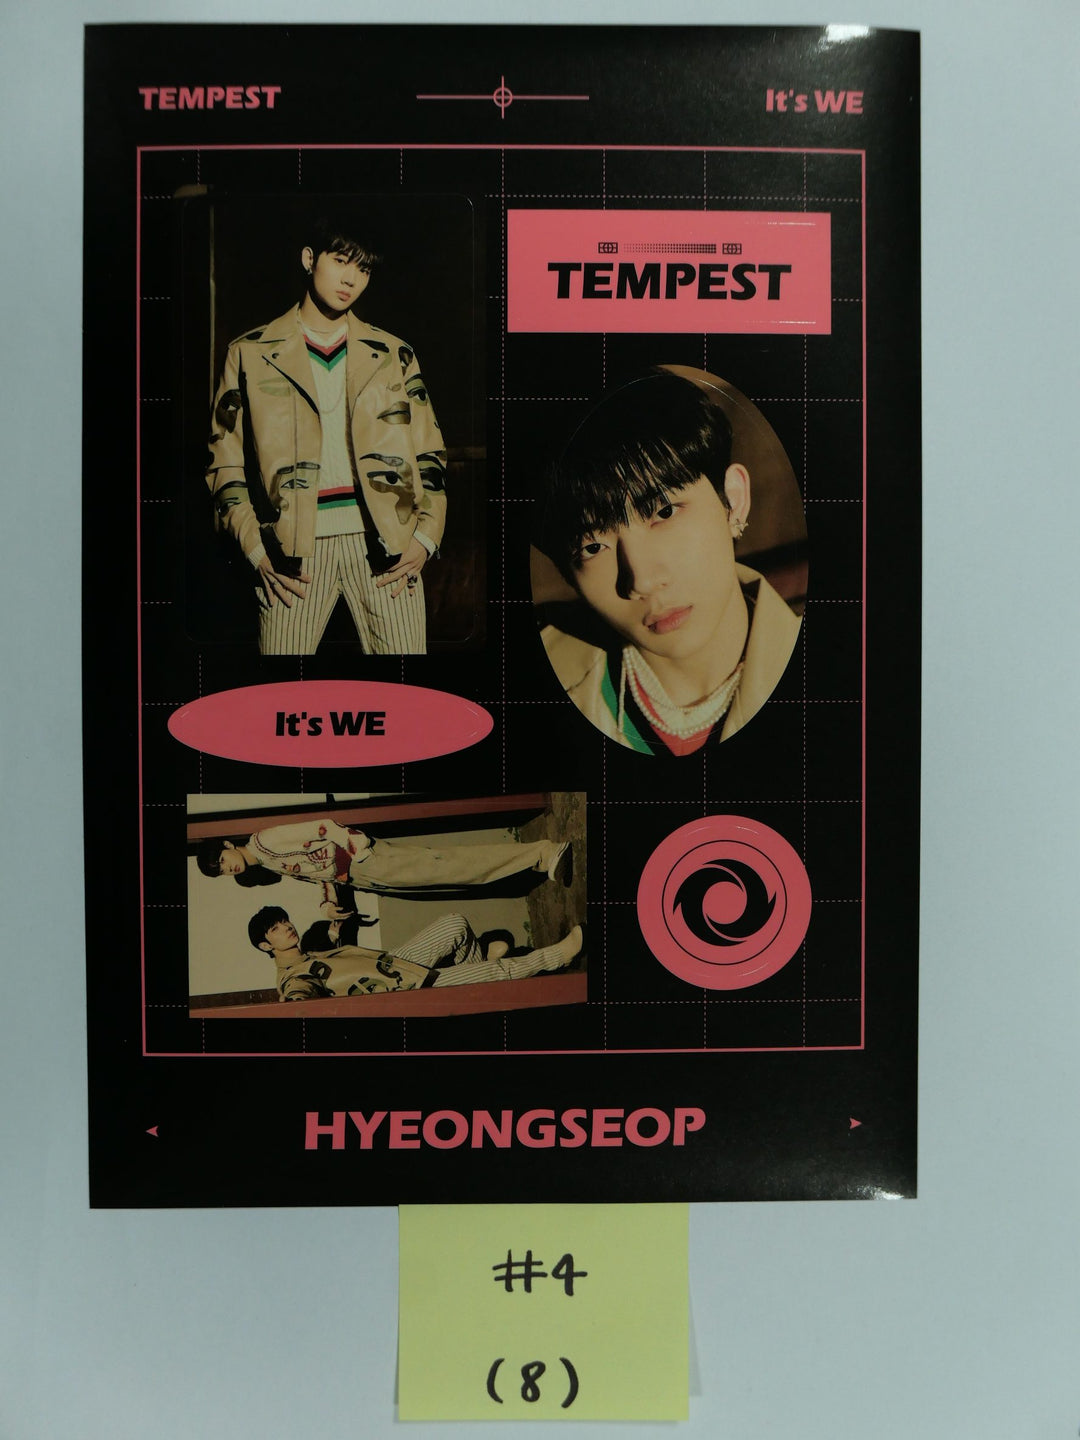 TEMPEST "It's ME" - 공식 스티커, 엽서